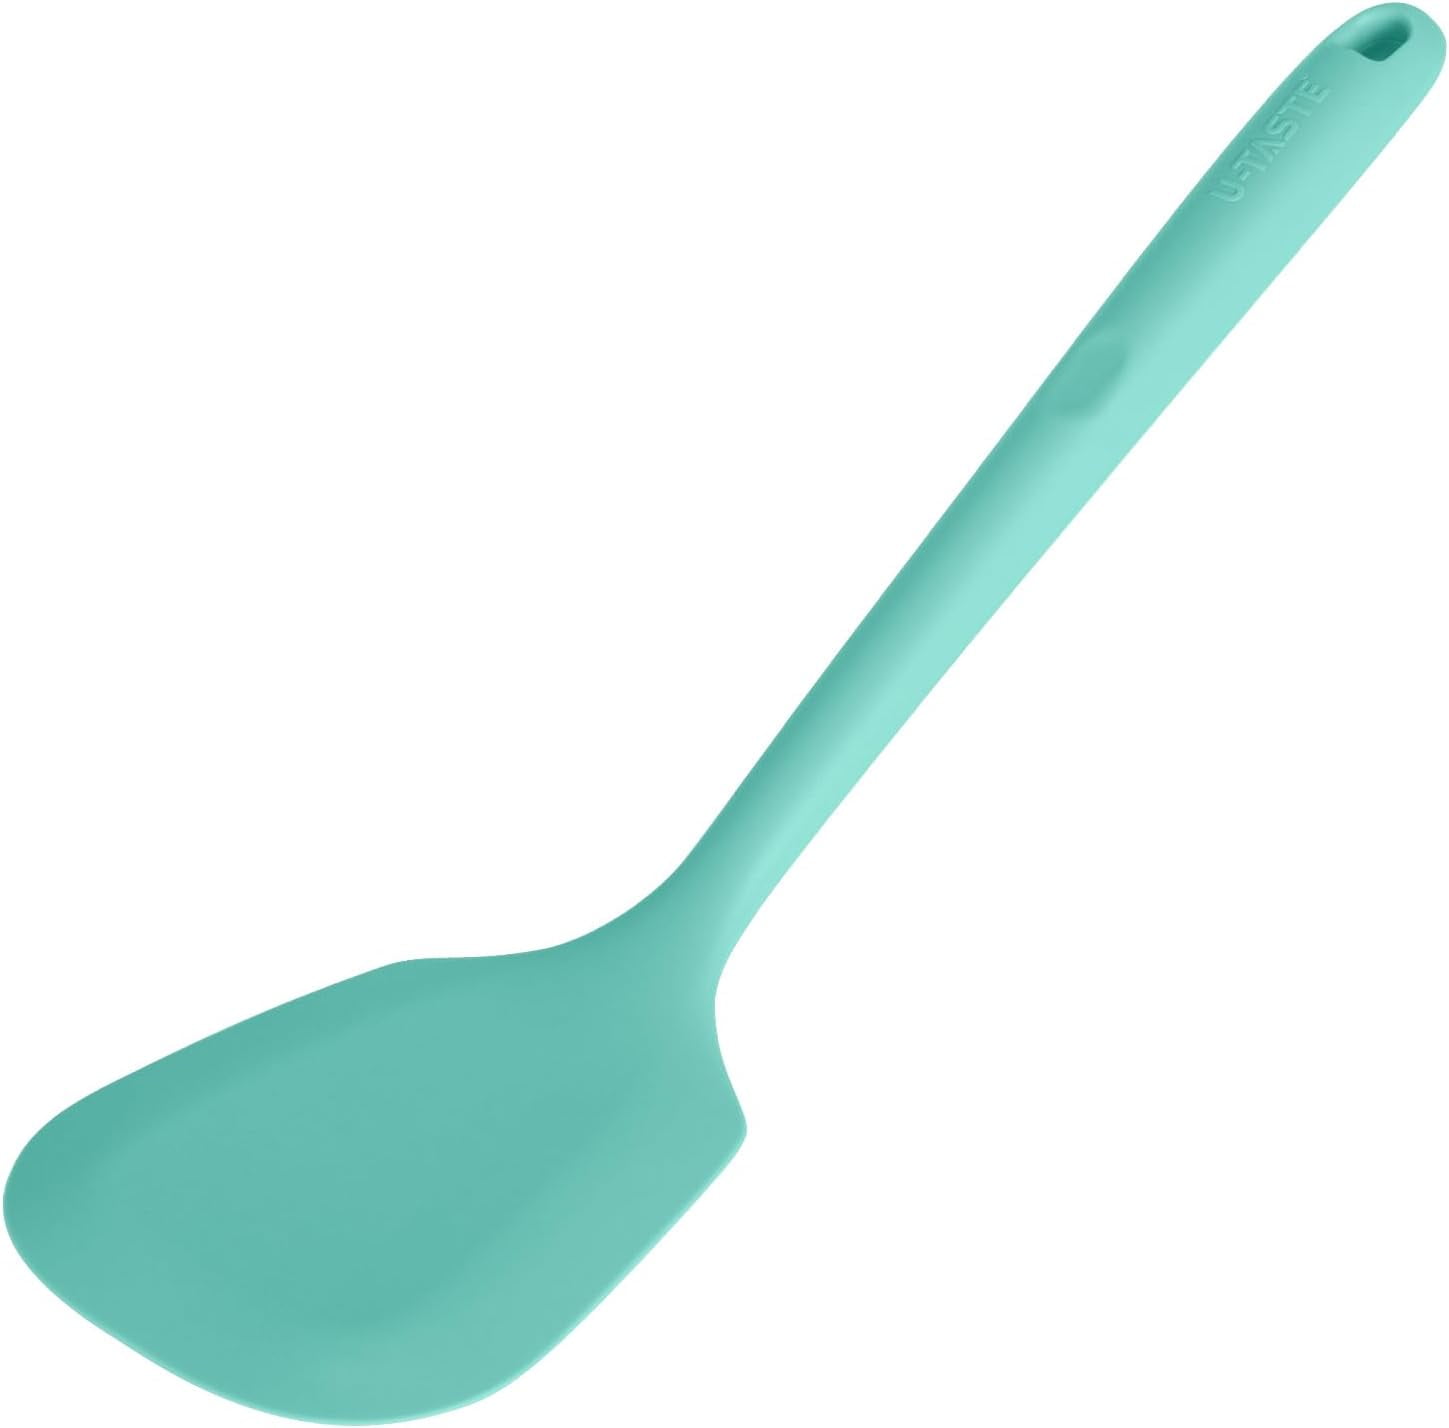 KitchenAid kitchen utensils gadgets in aqua sky (HAQA) each sold